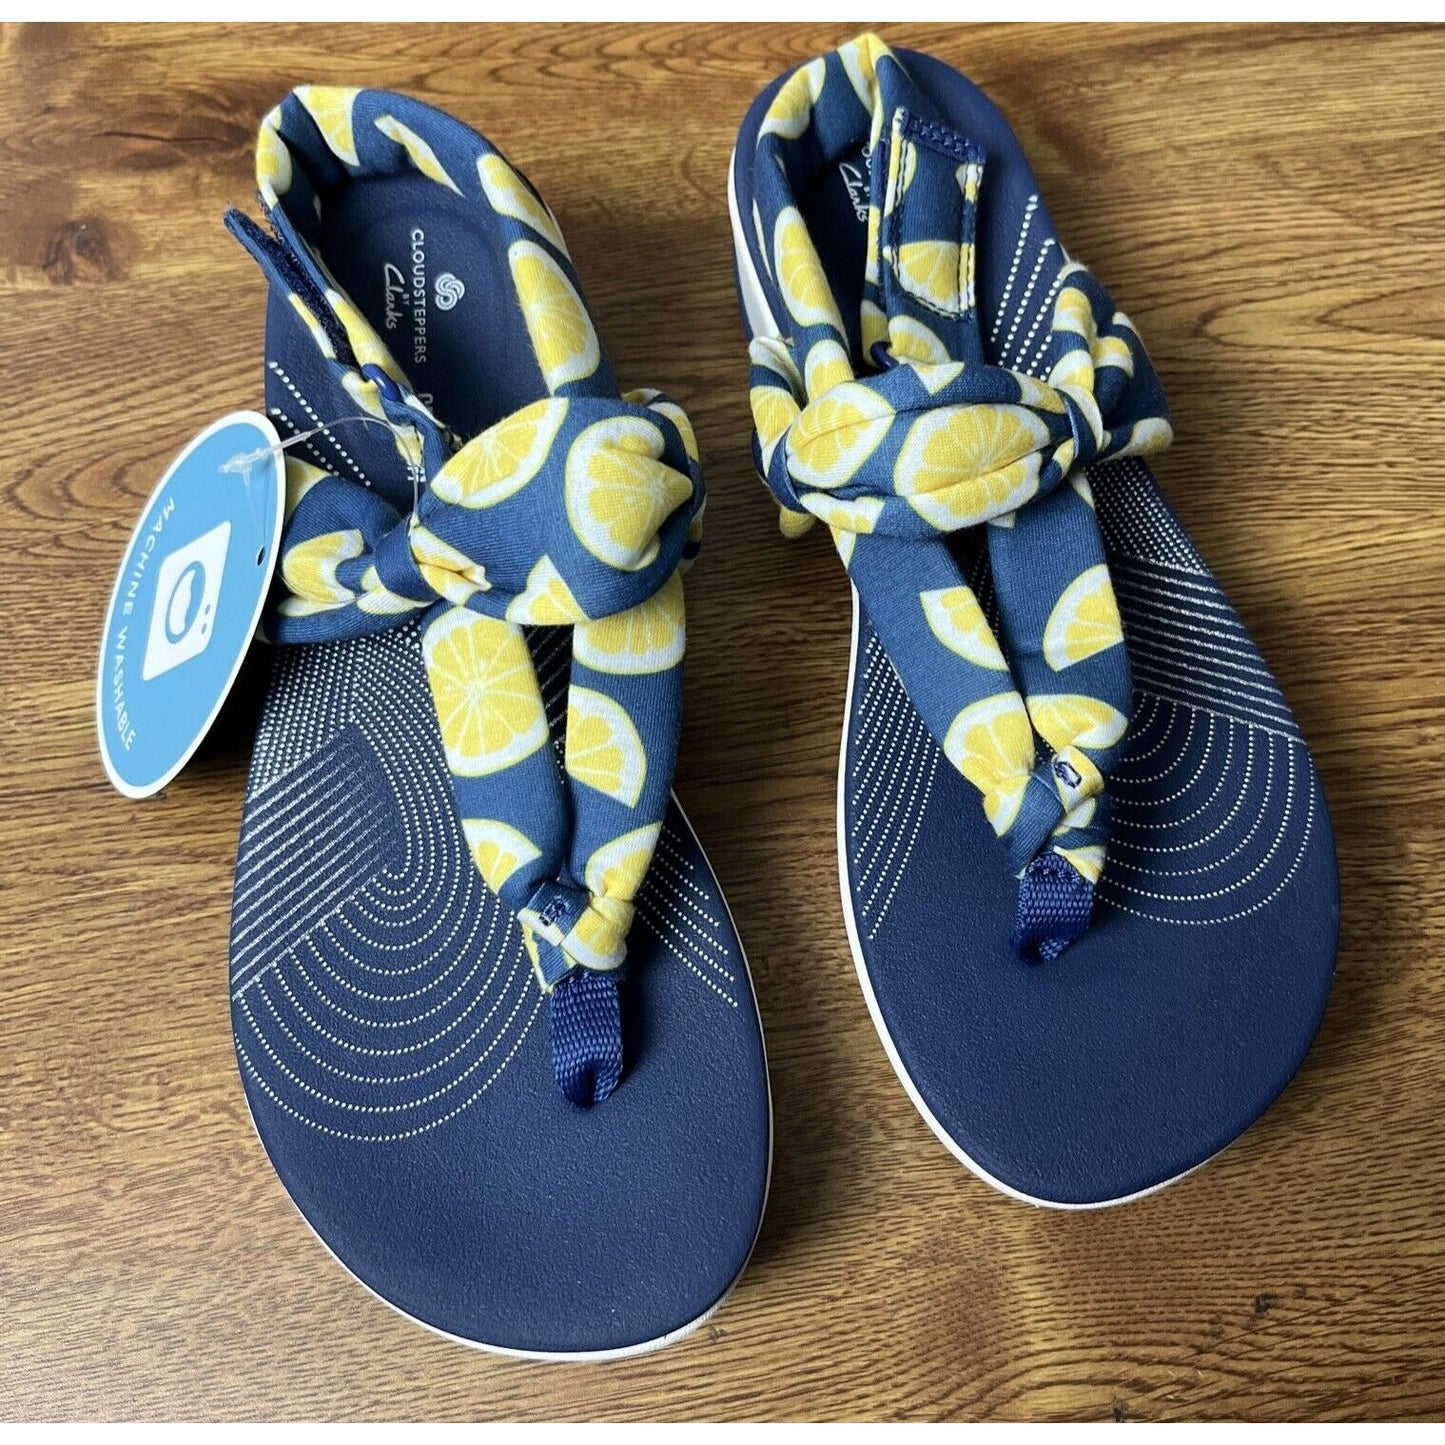 Clarks Cloudsteppers Jersey Sandals - Arla Nicole Blue Lemons 7 M NIB